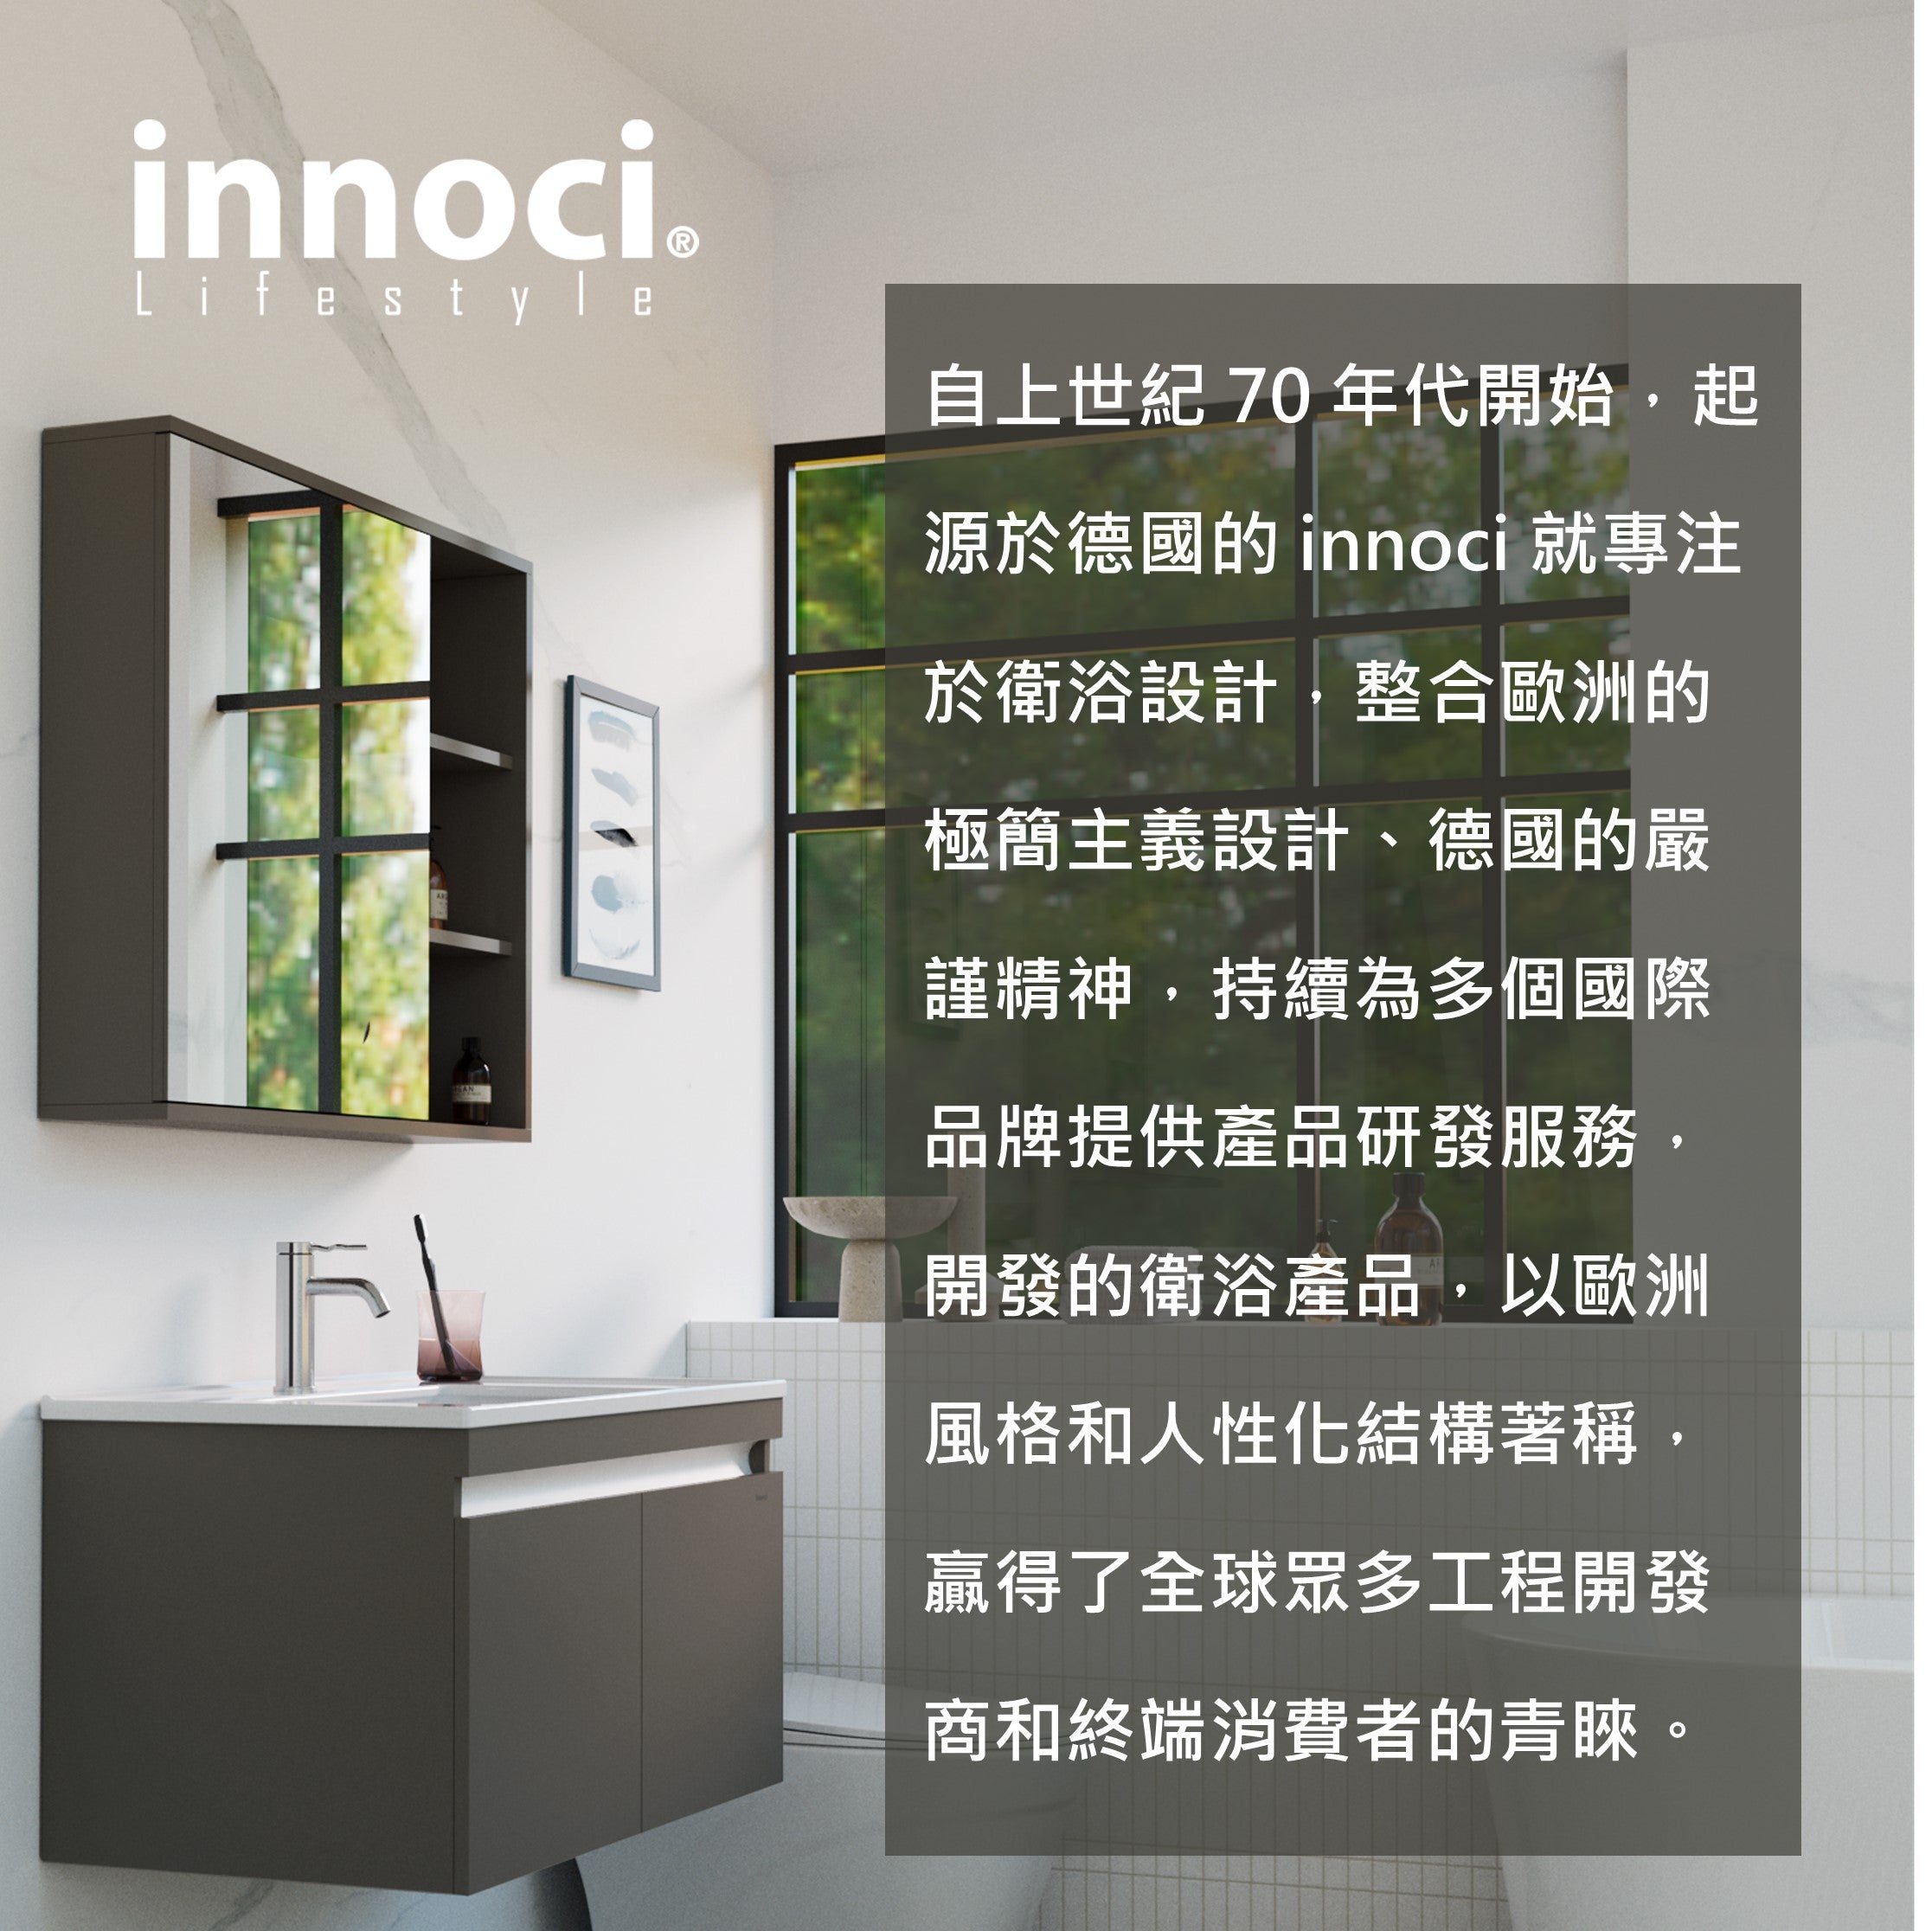 innoci_branding_introduction